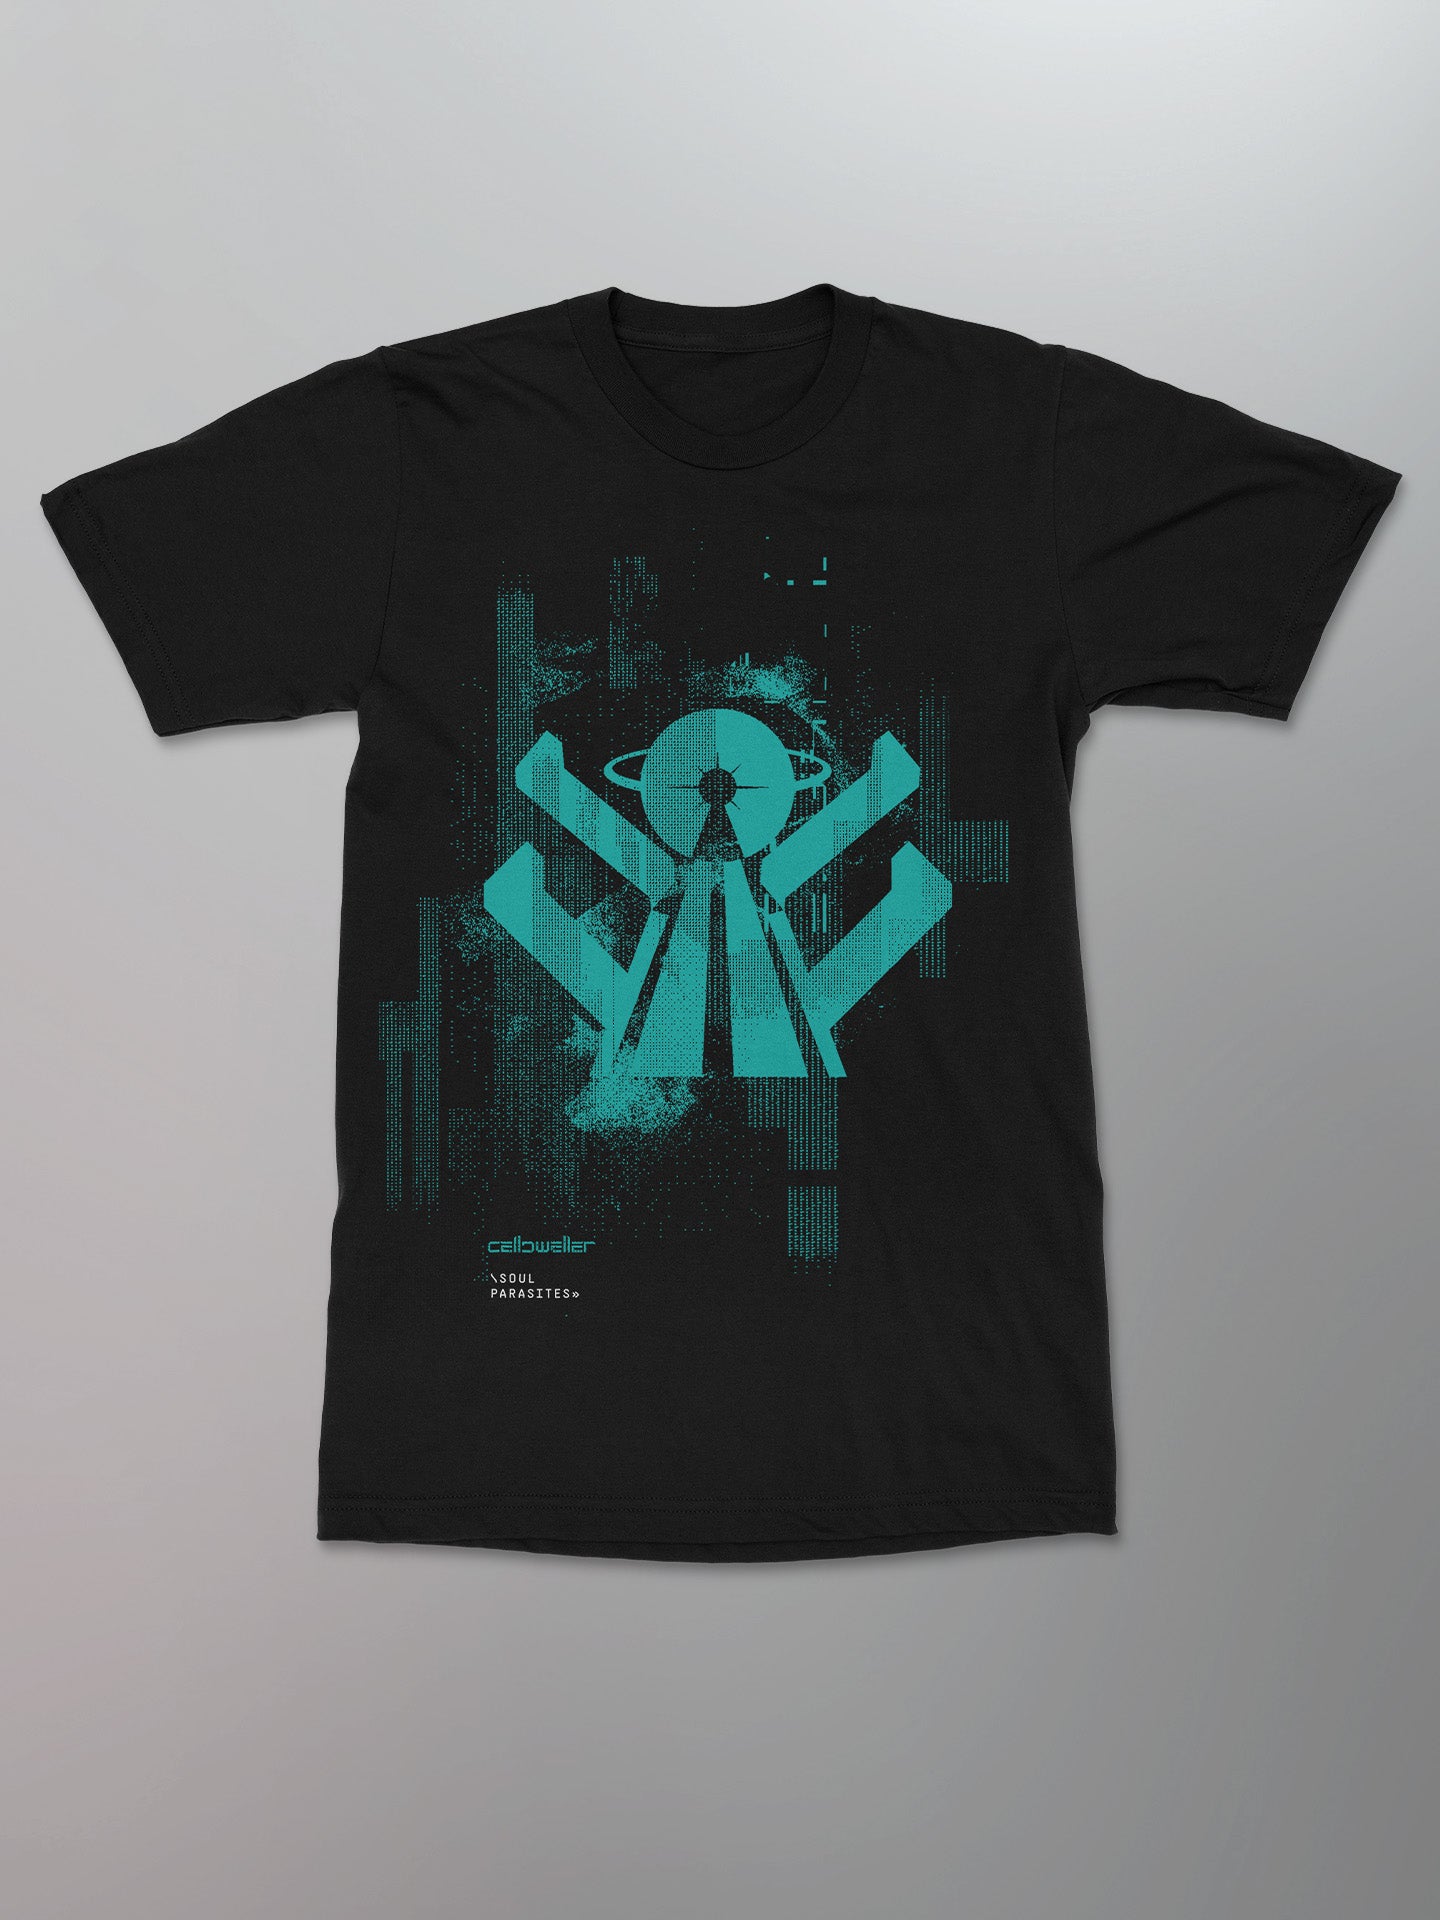 Celldweller - Soul Parasites Symbol Shirt